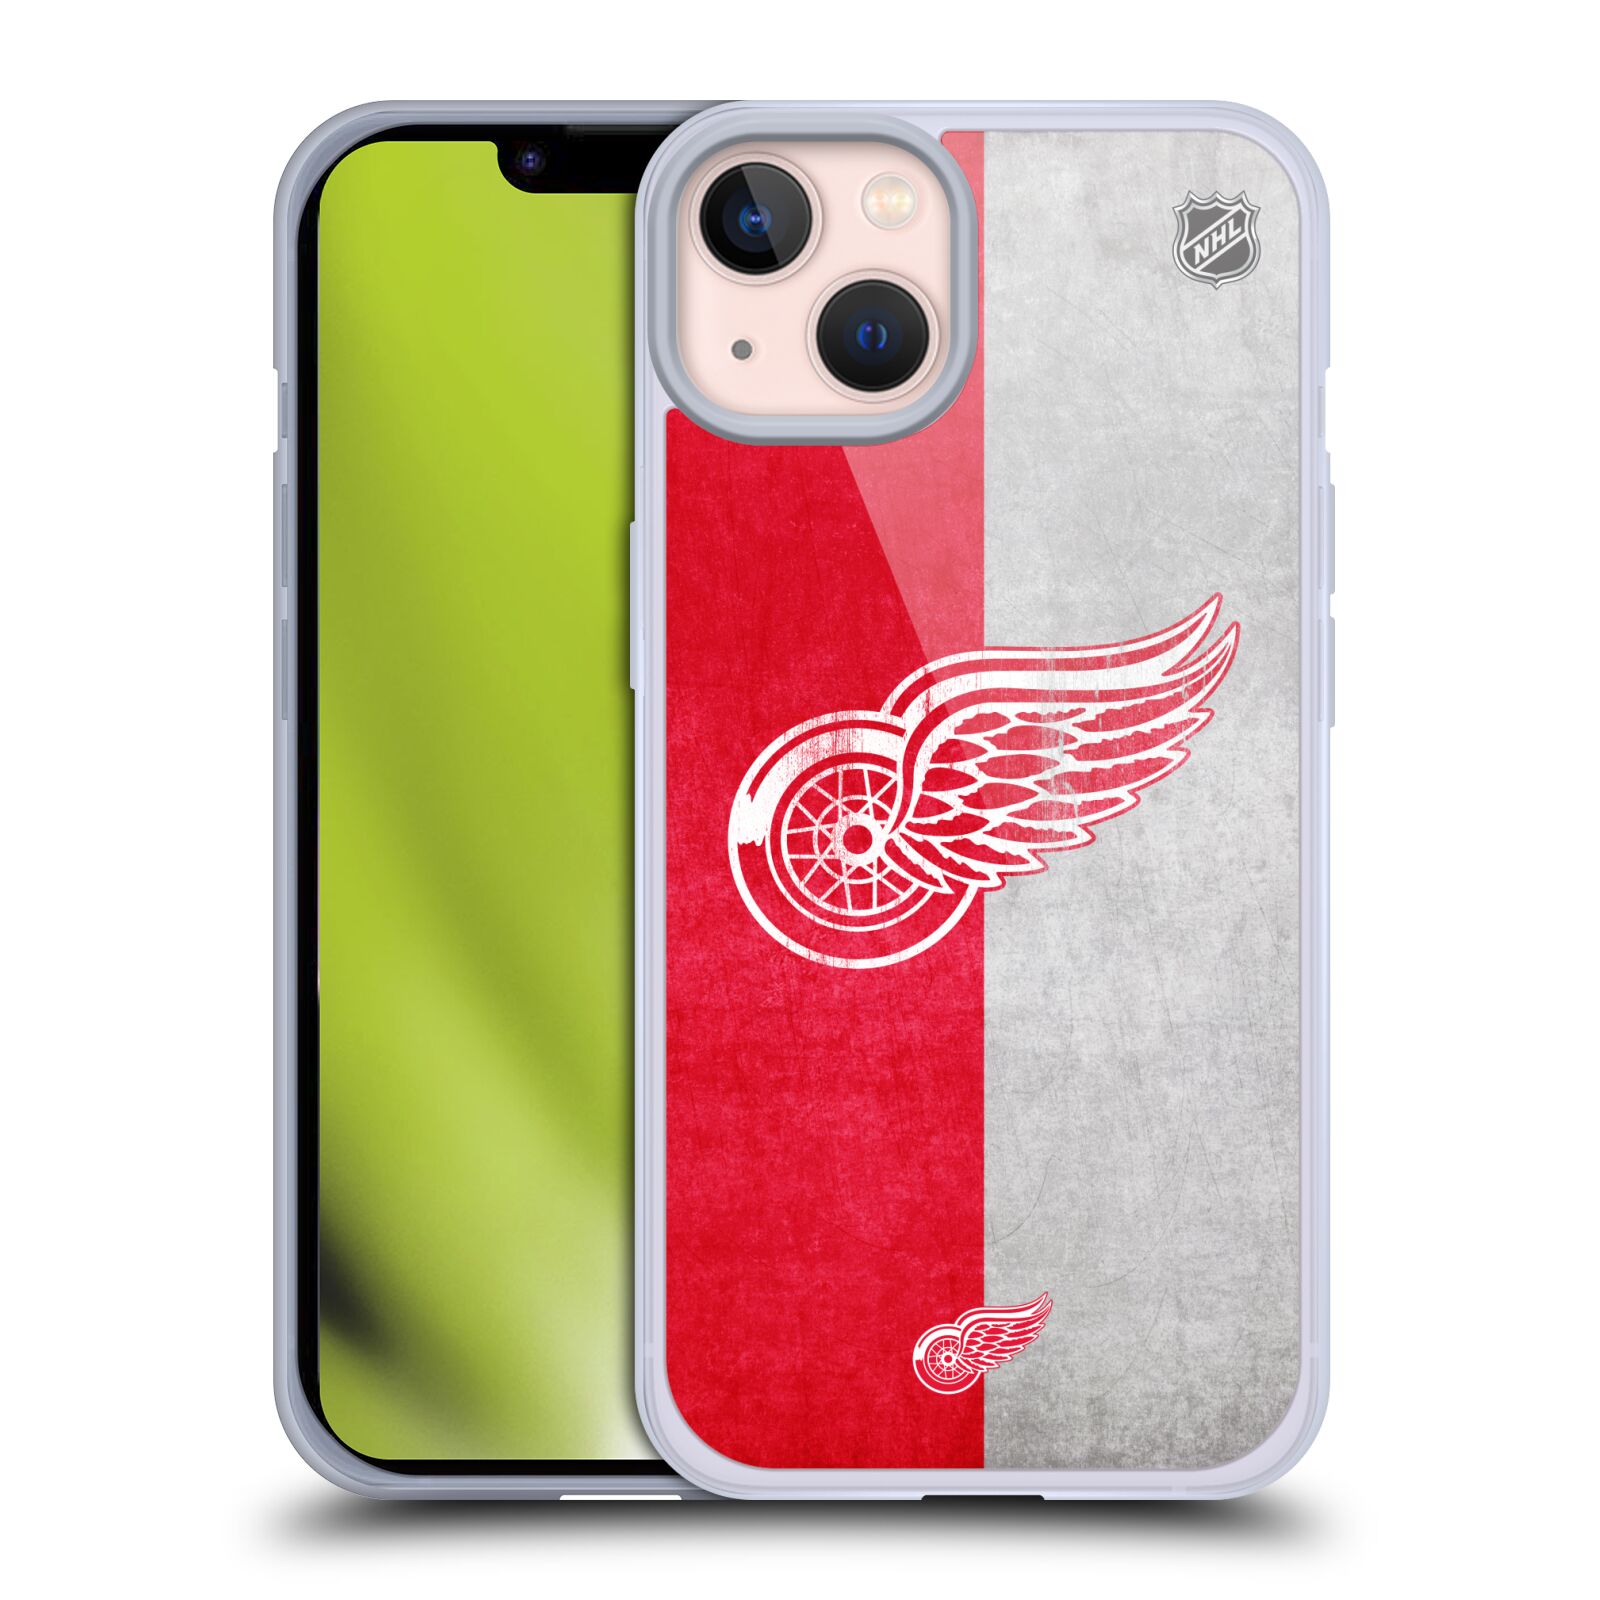 Silikonové pouzdro na mobil Apple iPhone 13 - NHL - Půlené logo Detroit Red Wings (Silikonový kryt, obal, pouzdro na mobilní telefon Apple iPhone 13 s licencovaným motivem NHL - Půlené logo Detroit Red Wings)